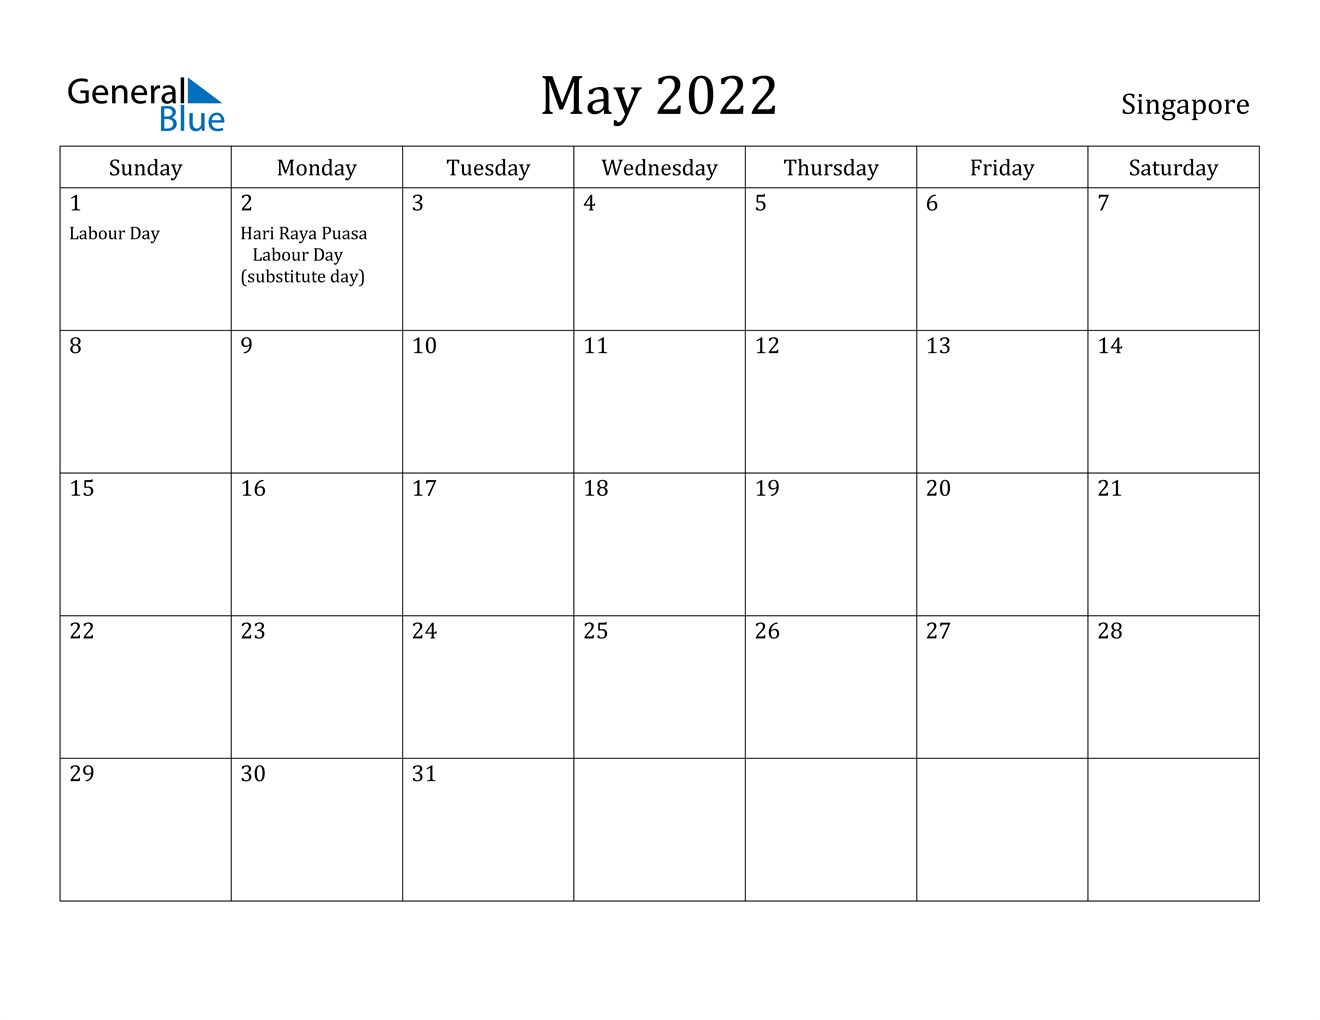 May 2022 Calendar - Singapore